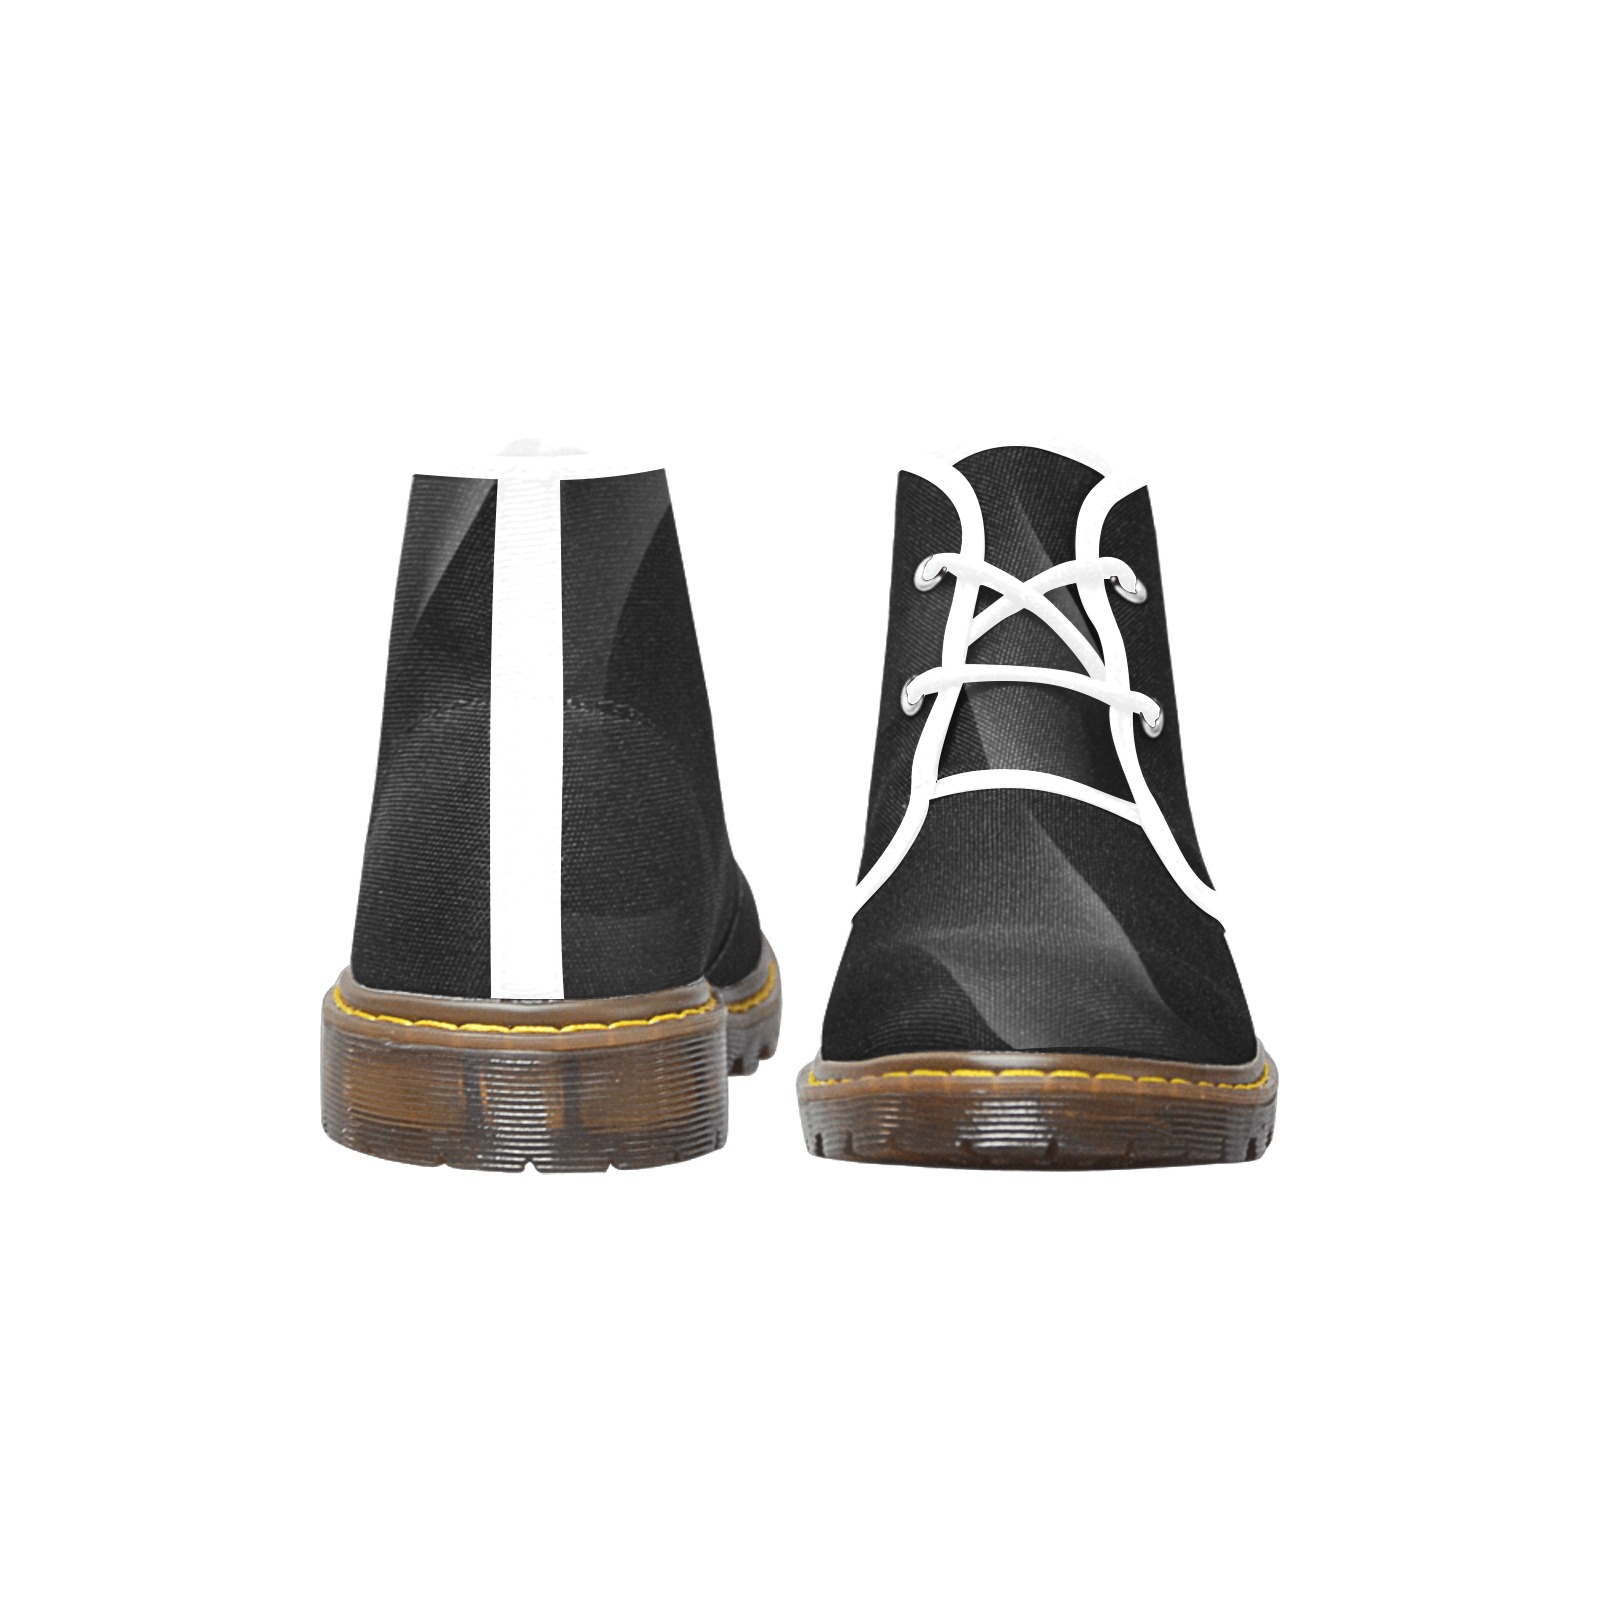 Women Chukka Boot - Black 2 Women's Canvas Chukka Boots (Model 2402-1)